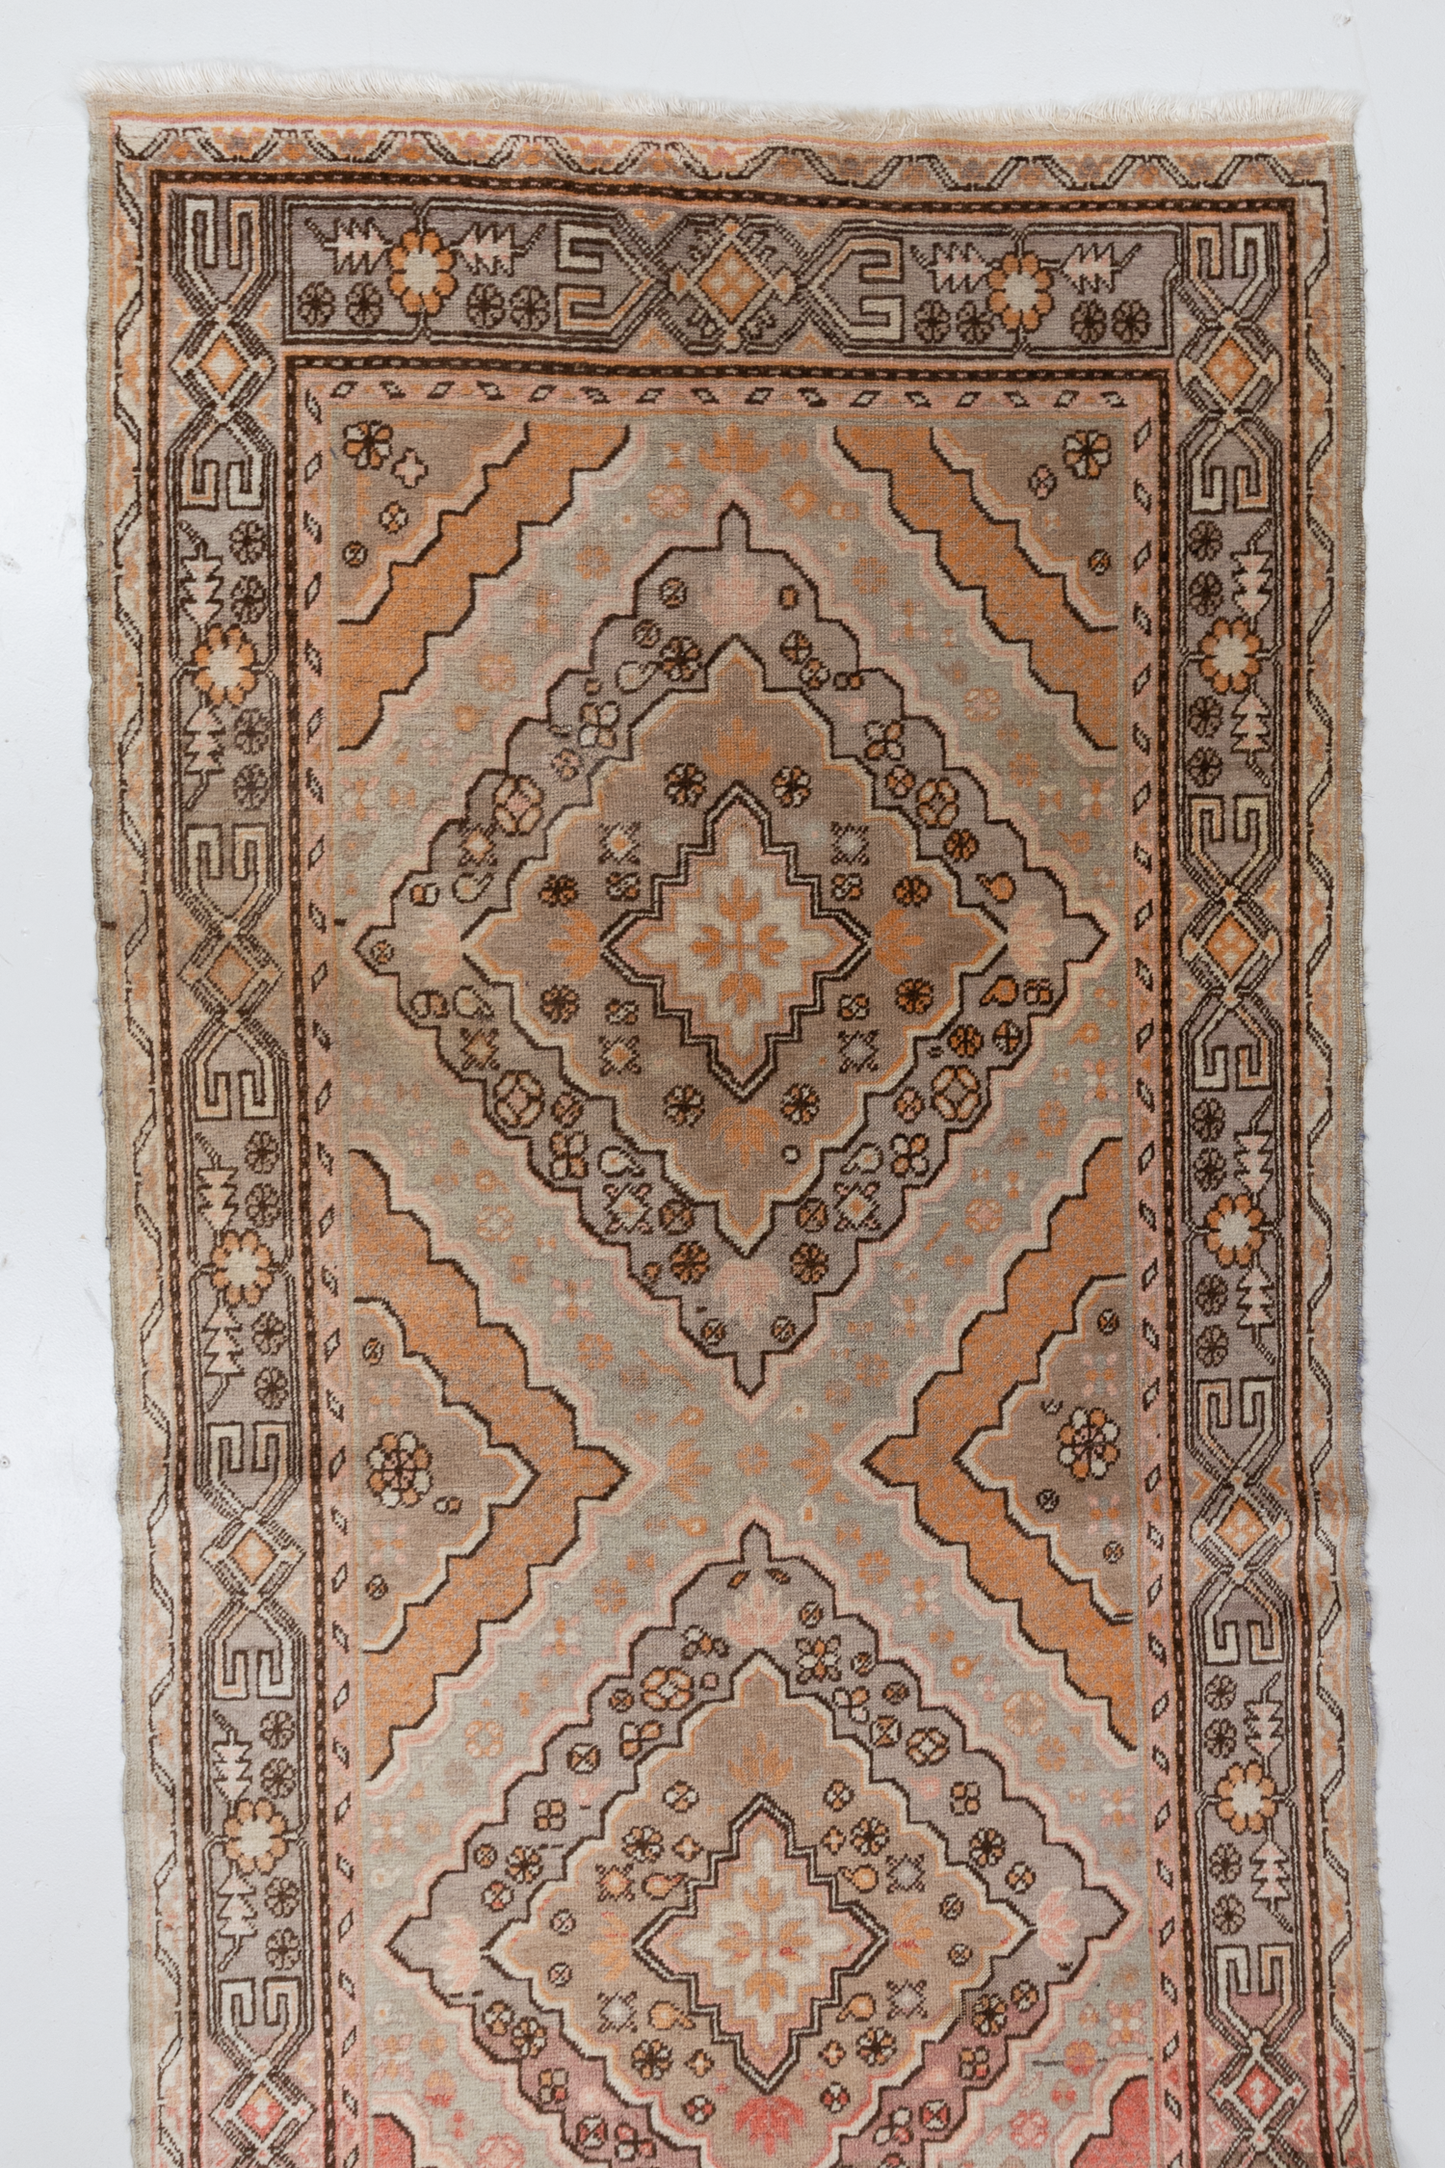 Antique Khotan Runner Rug